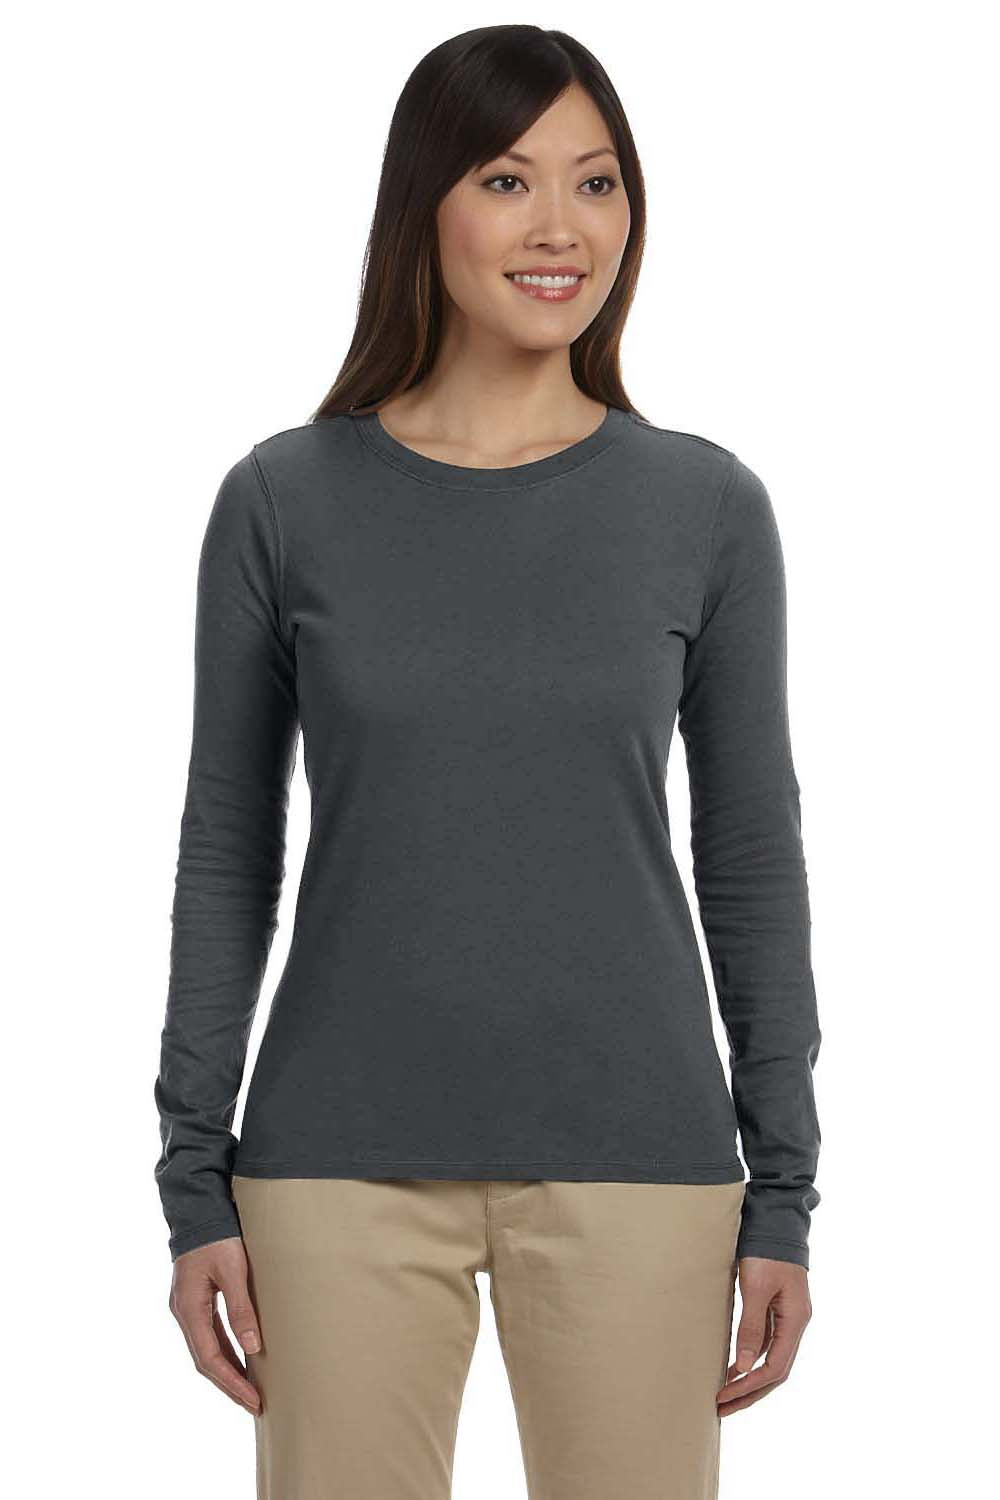 Econscious EC3500 Womens Long Sleeve Crewneck T-Shirt Charcoal Grey Front